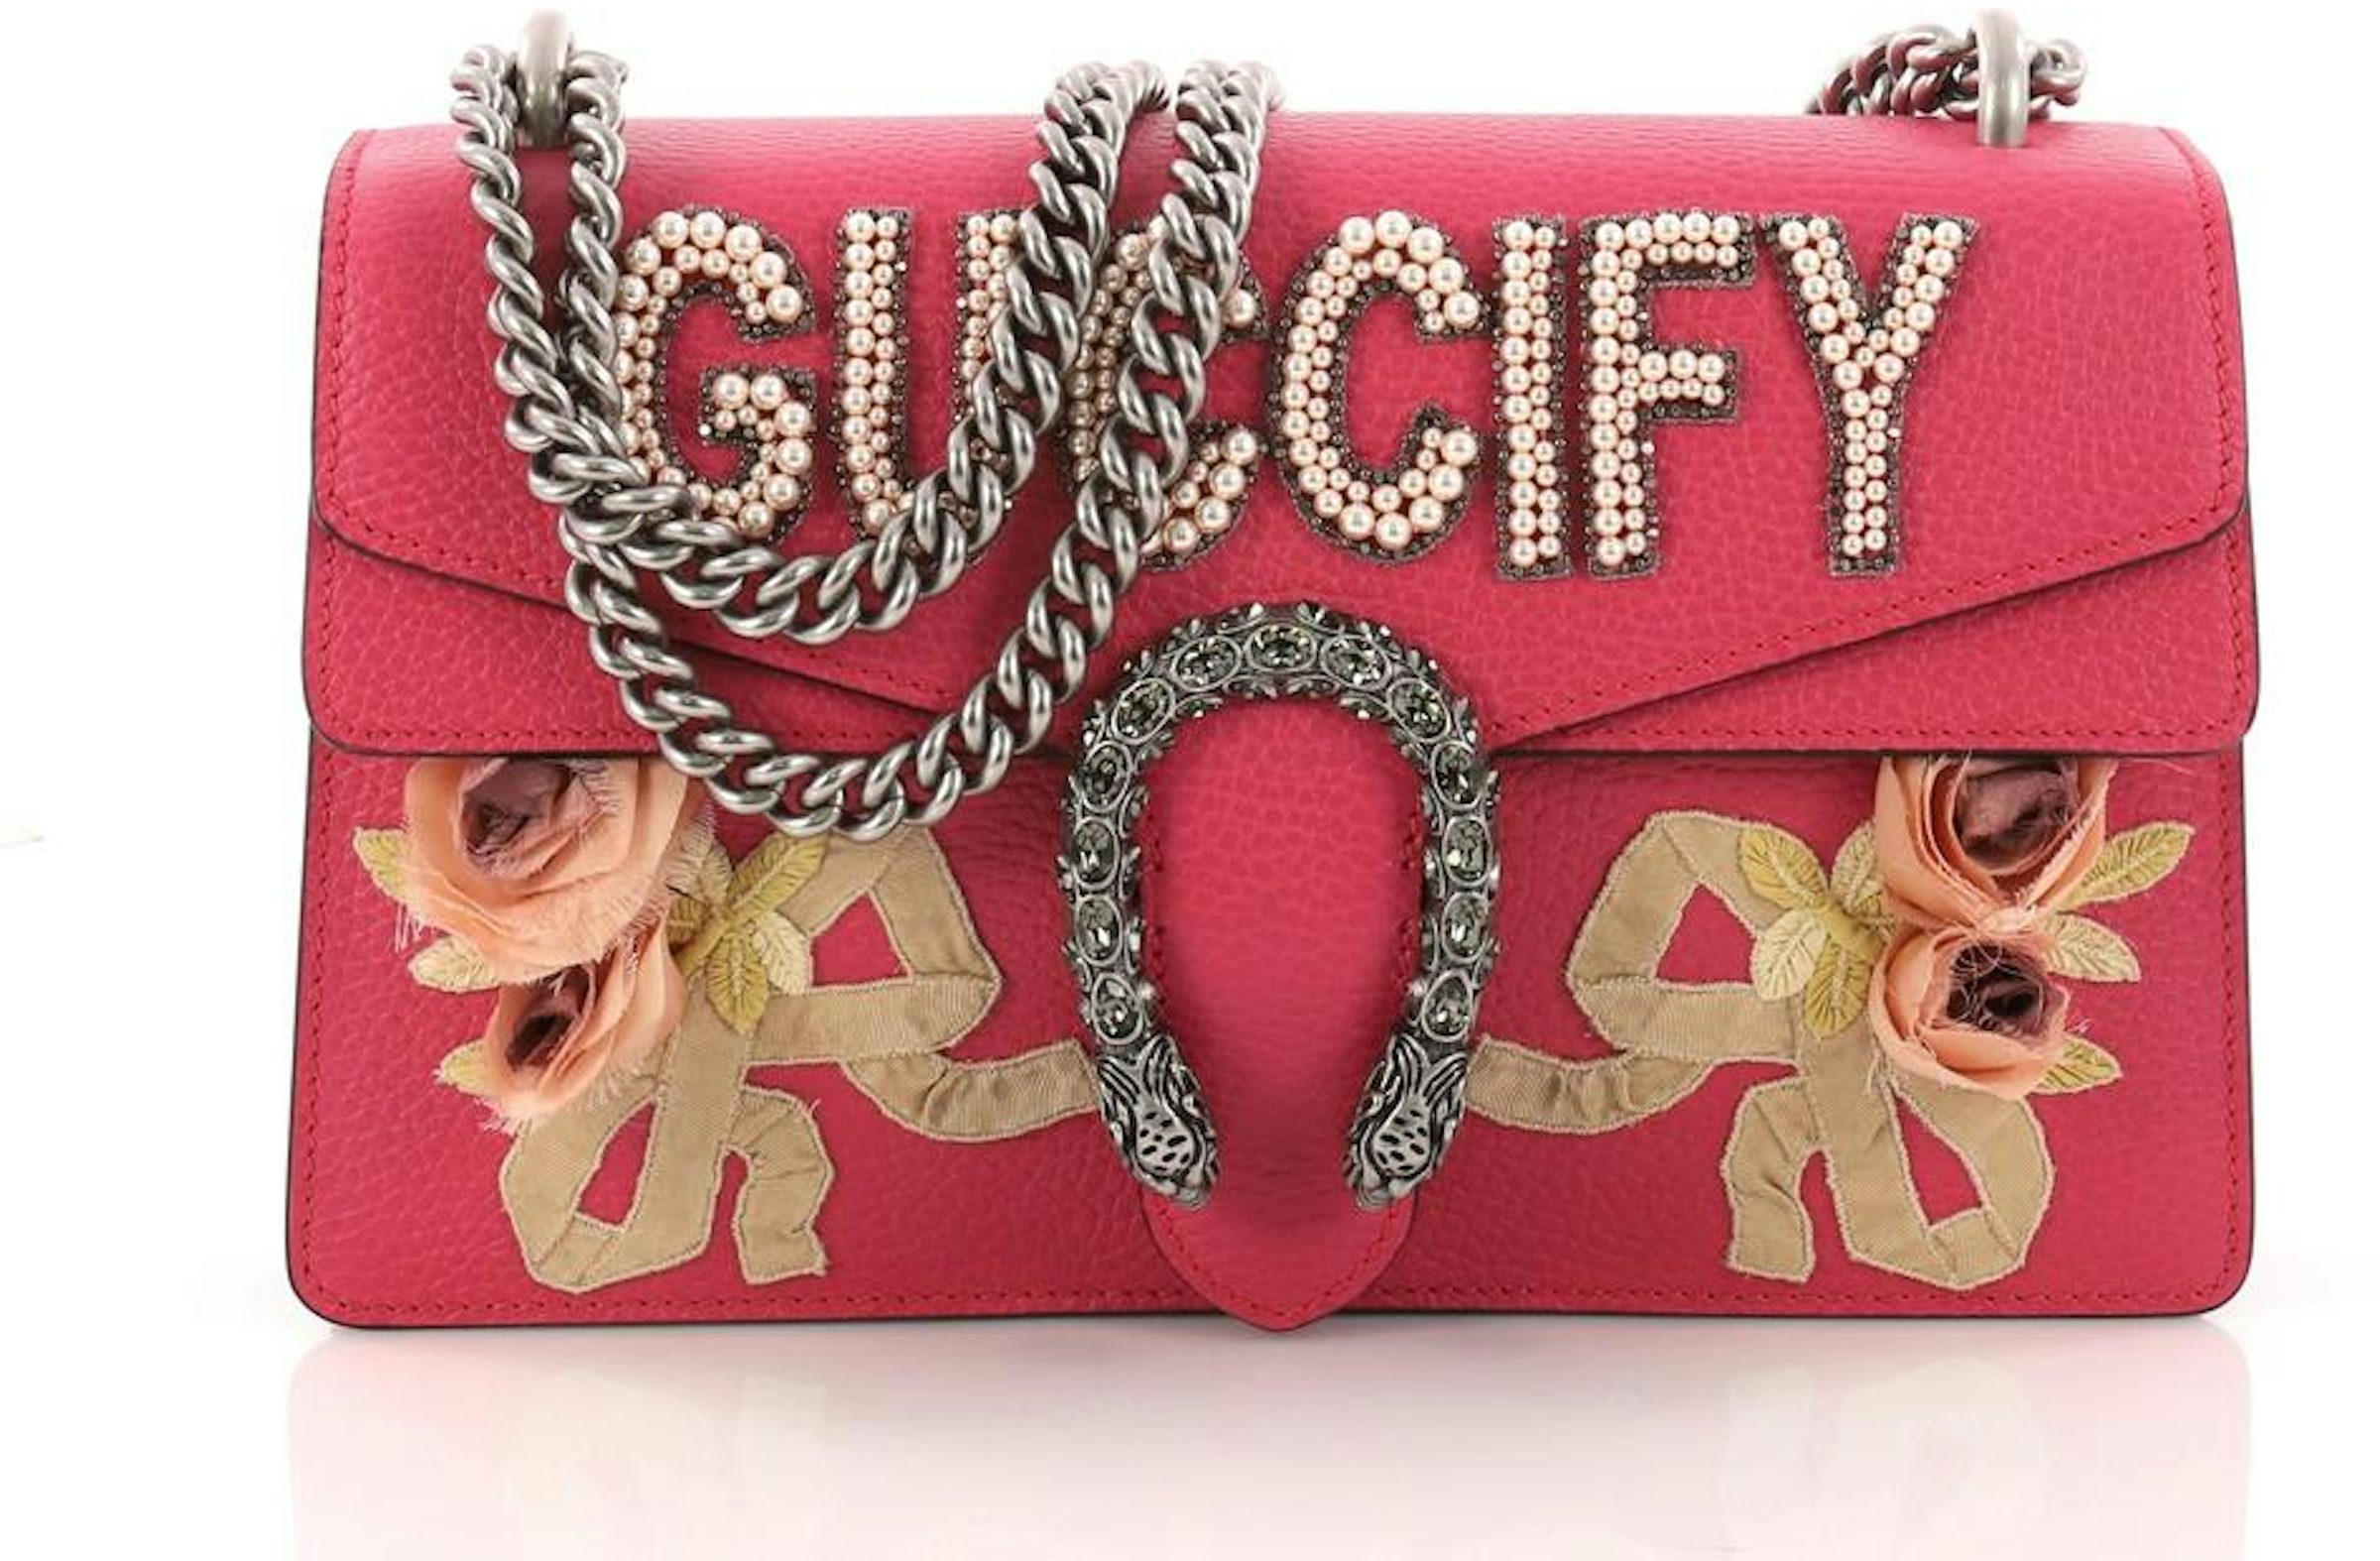 Gucci GG Supreme Monogram Suede Crystal Small Dionysus Shoulder Bag Beige Ebony Black